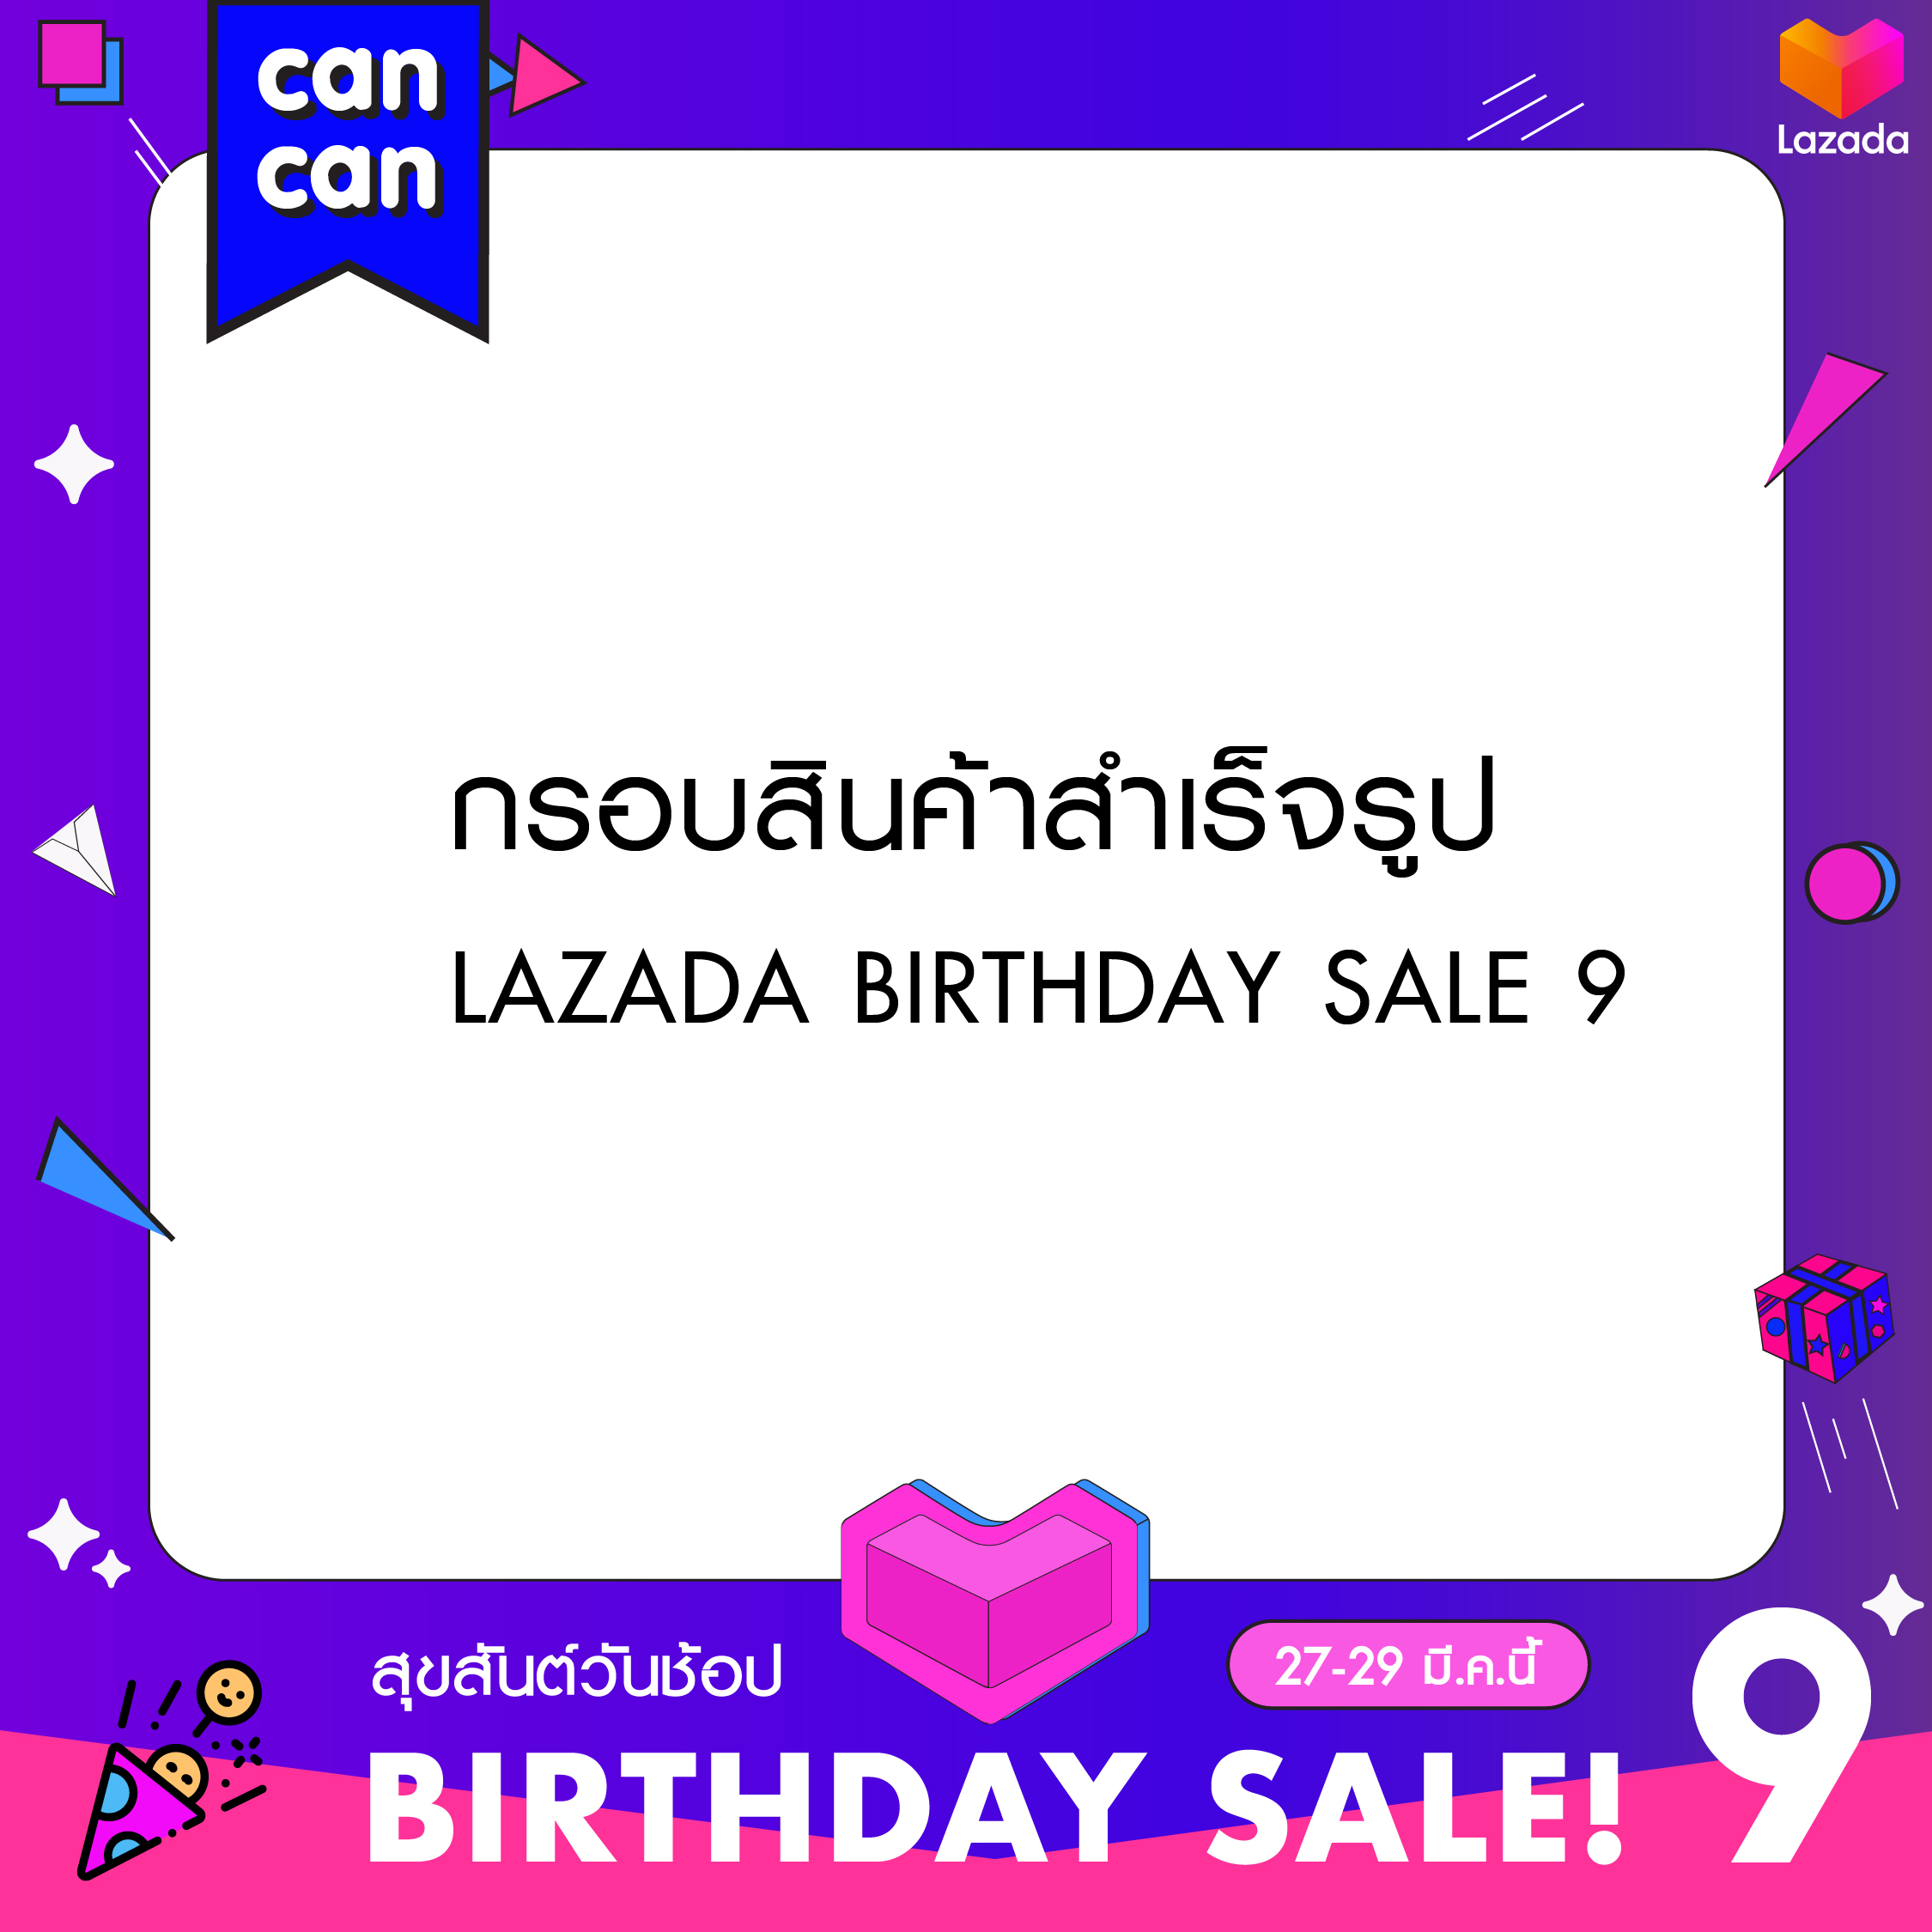 CanCan Creative Lab - กรอบสินค้าสำเร็จรูป  Lazada 9 Birthday : ราคาพิเศษ  (จัดส่งทางอีเมลหรือแชท)